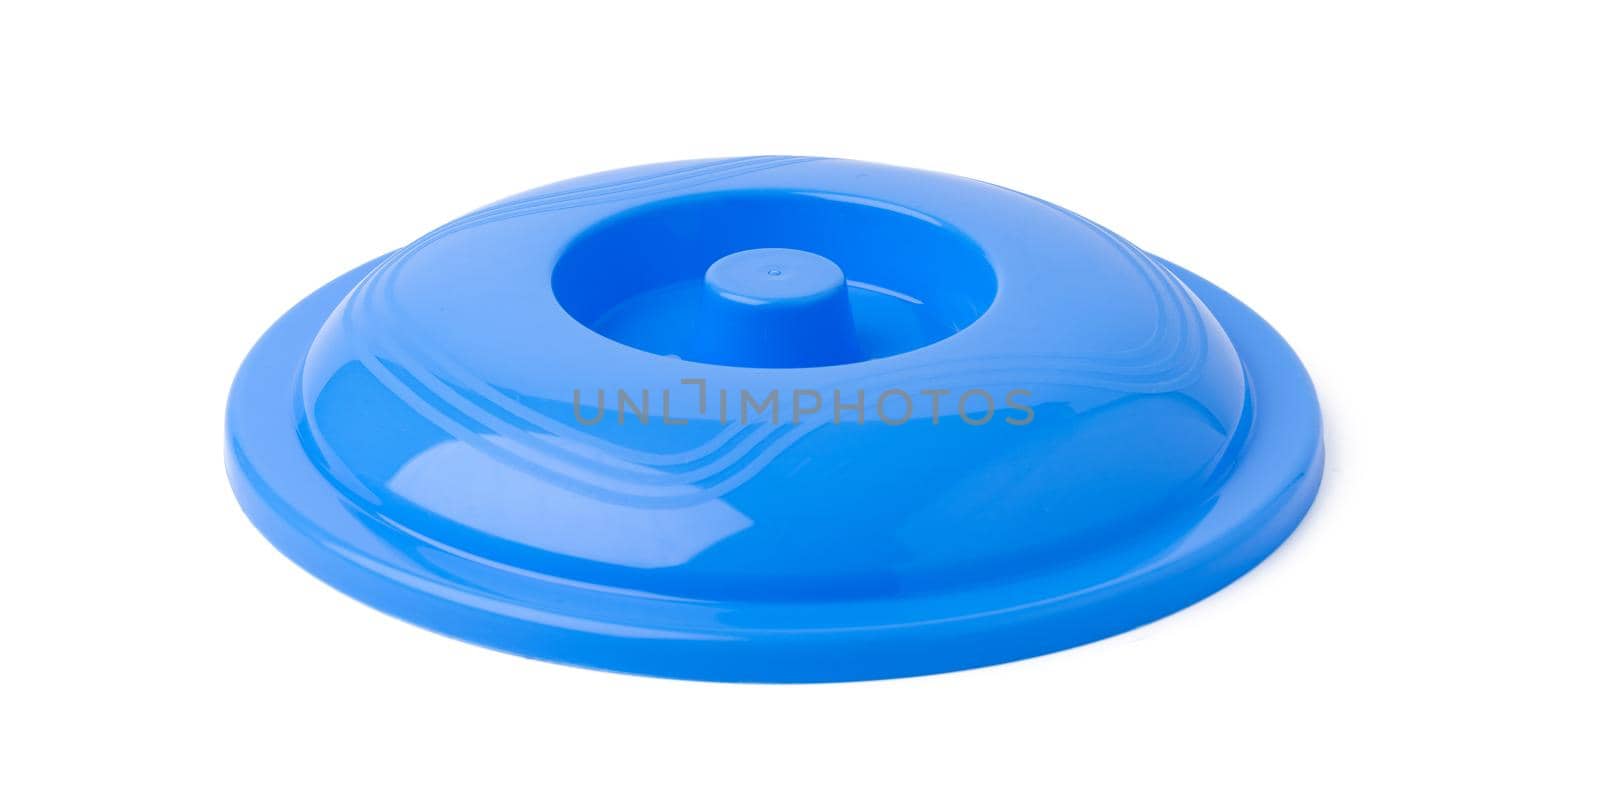 Blue plastic bucket lid isolated on white background